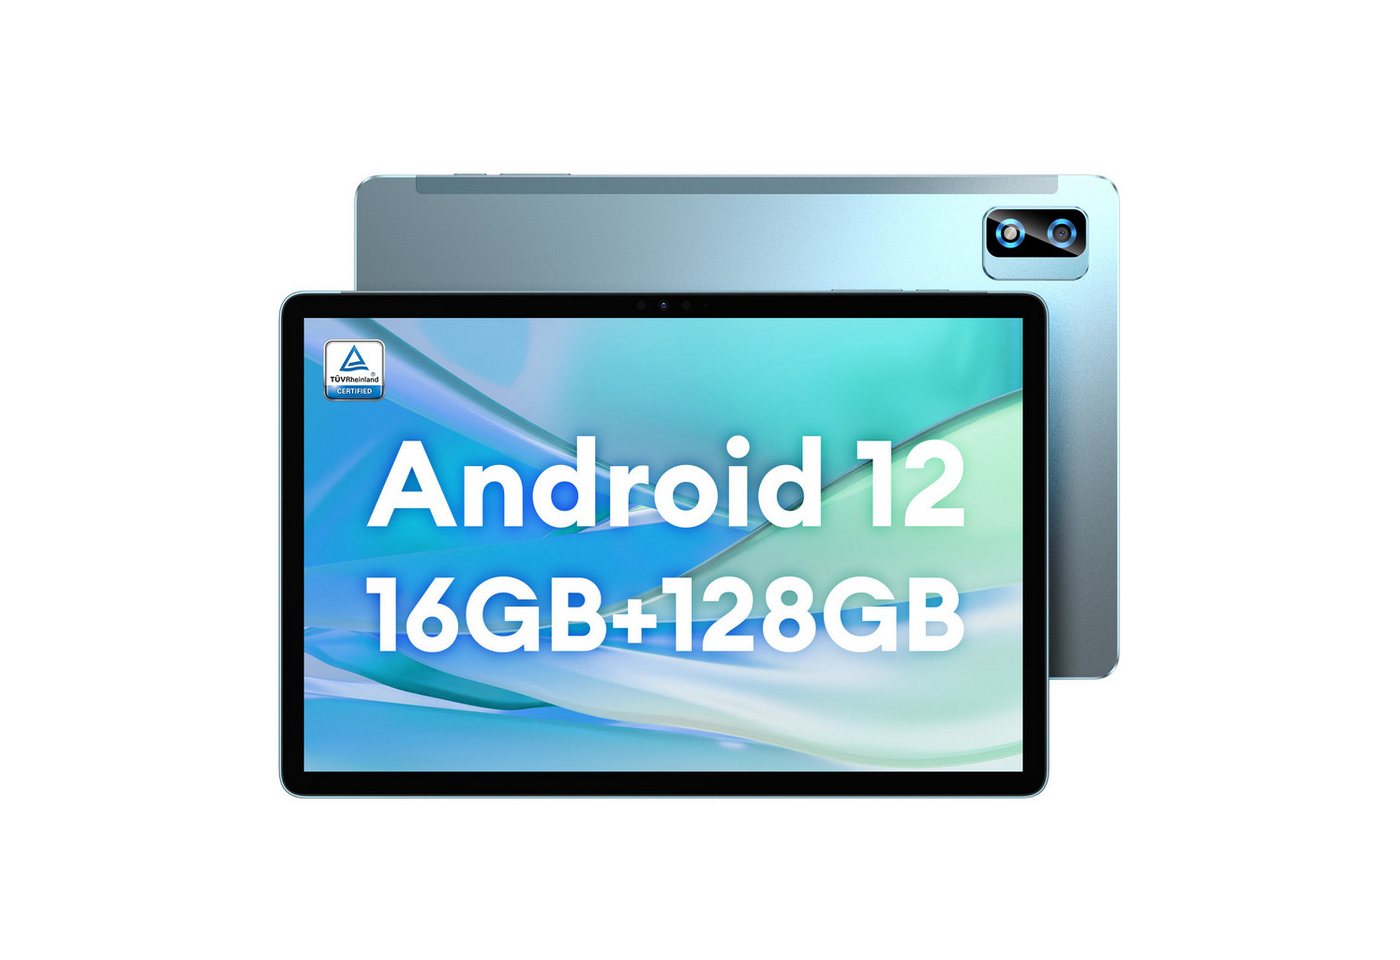 Ulife Headwolf, Wpad2, 16GB RAM(4+4GB erweiterbar), 128GB ROM Tablet (10, Android 12, 2G, 3G, 4G, 7mm dick, 8 MP Frontkamera, 16 MP Rückkamera)" von Ulife